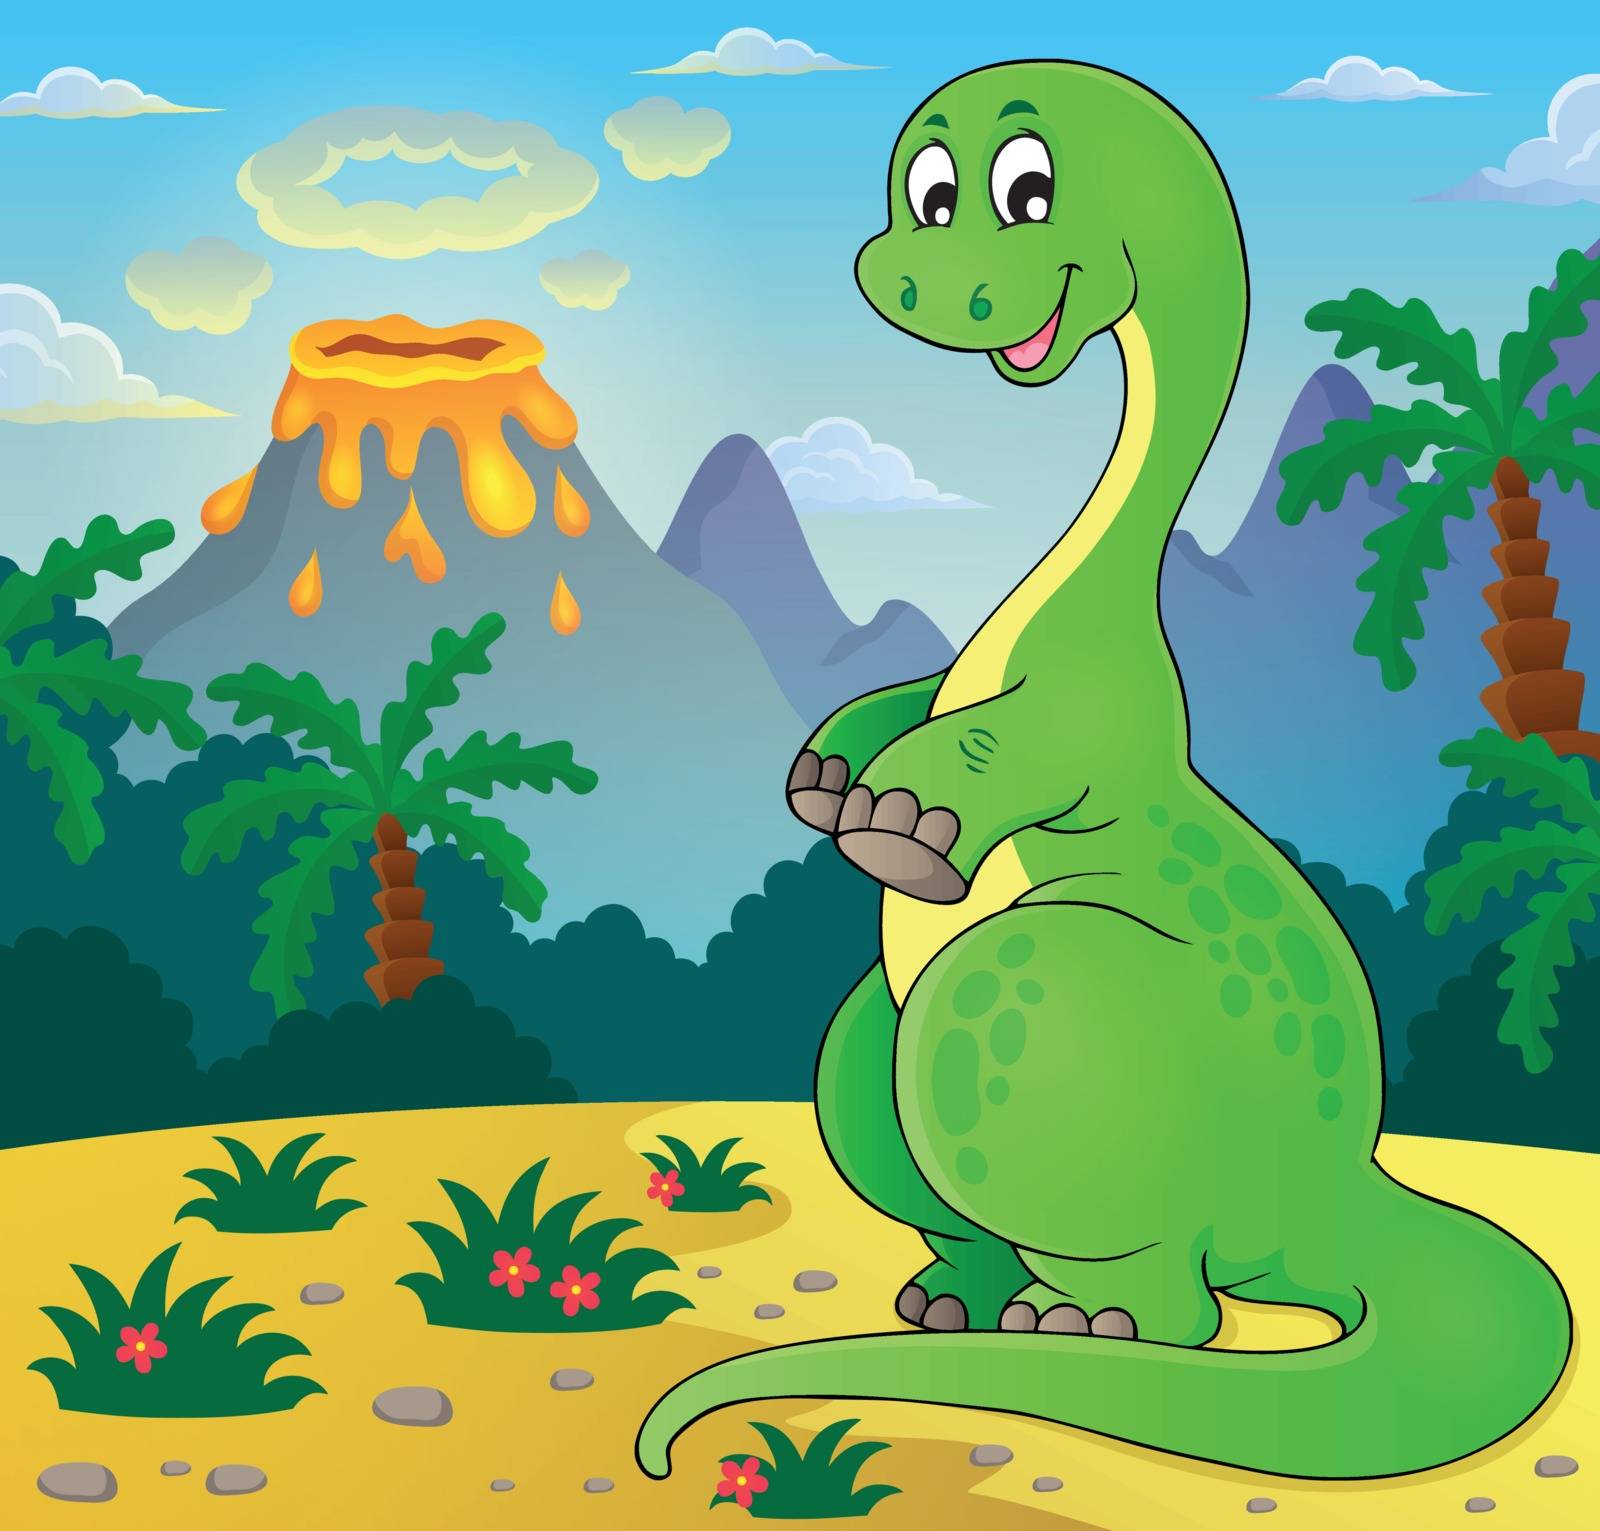 Image with dinosaur thematics 7 - eps10 vector illustration.